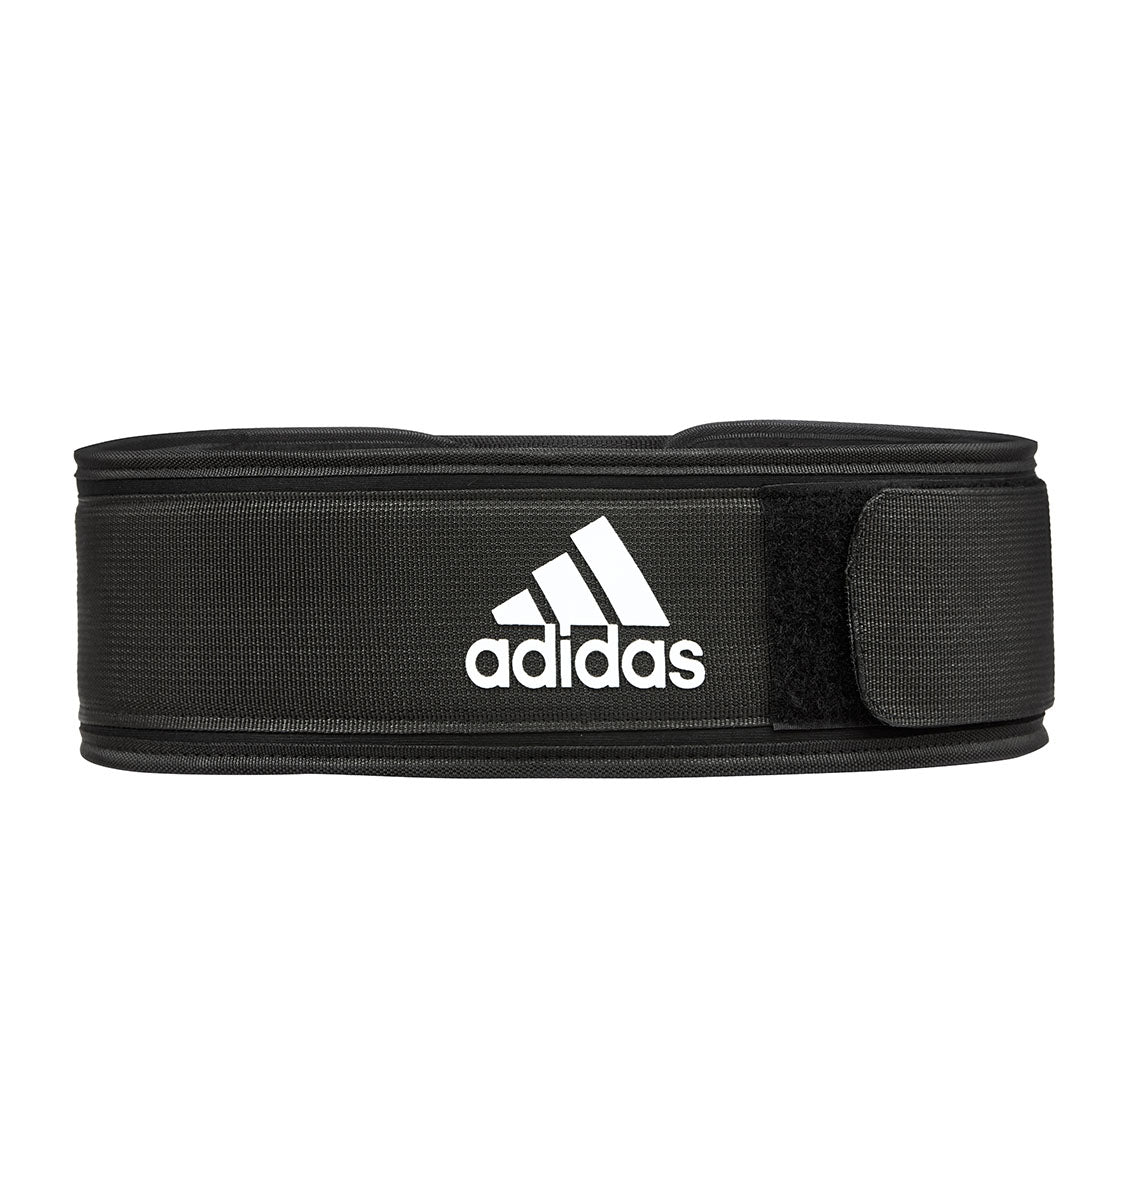 adidas Essential Weight Lifting Belt - Black - 5